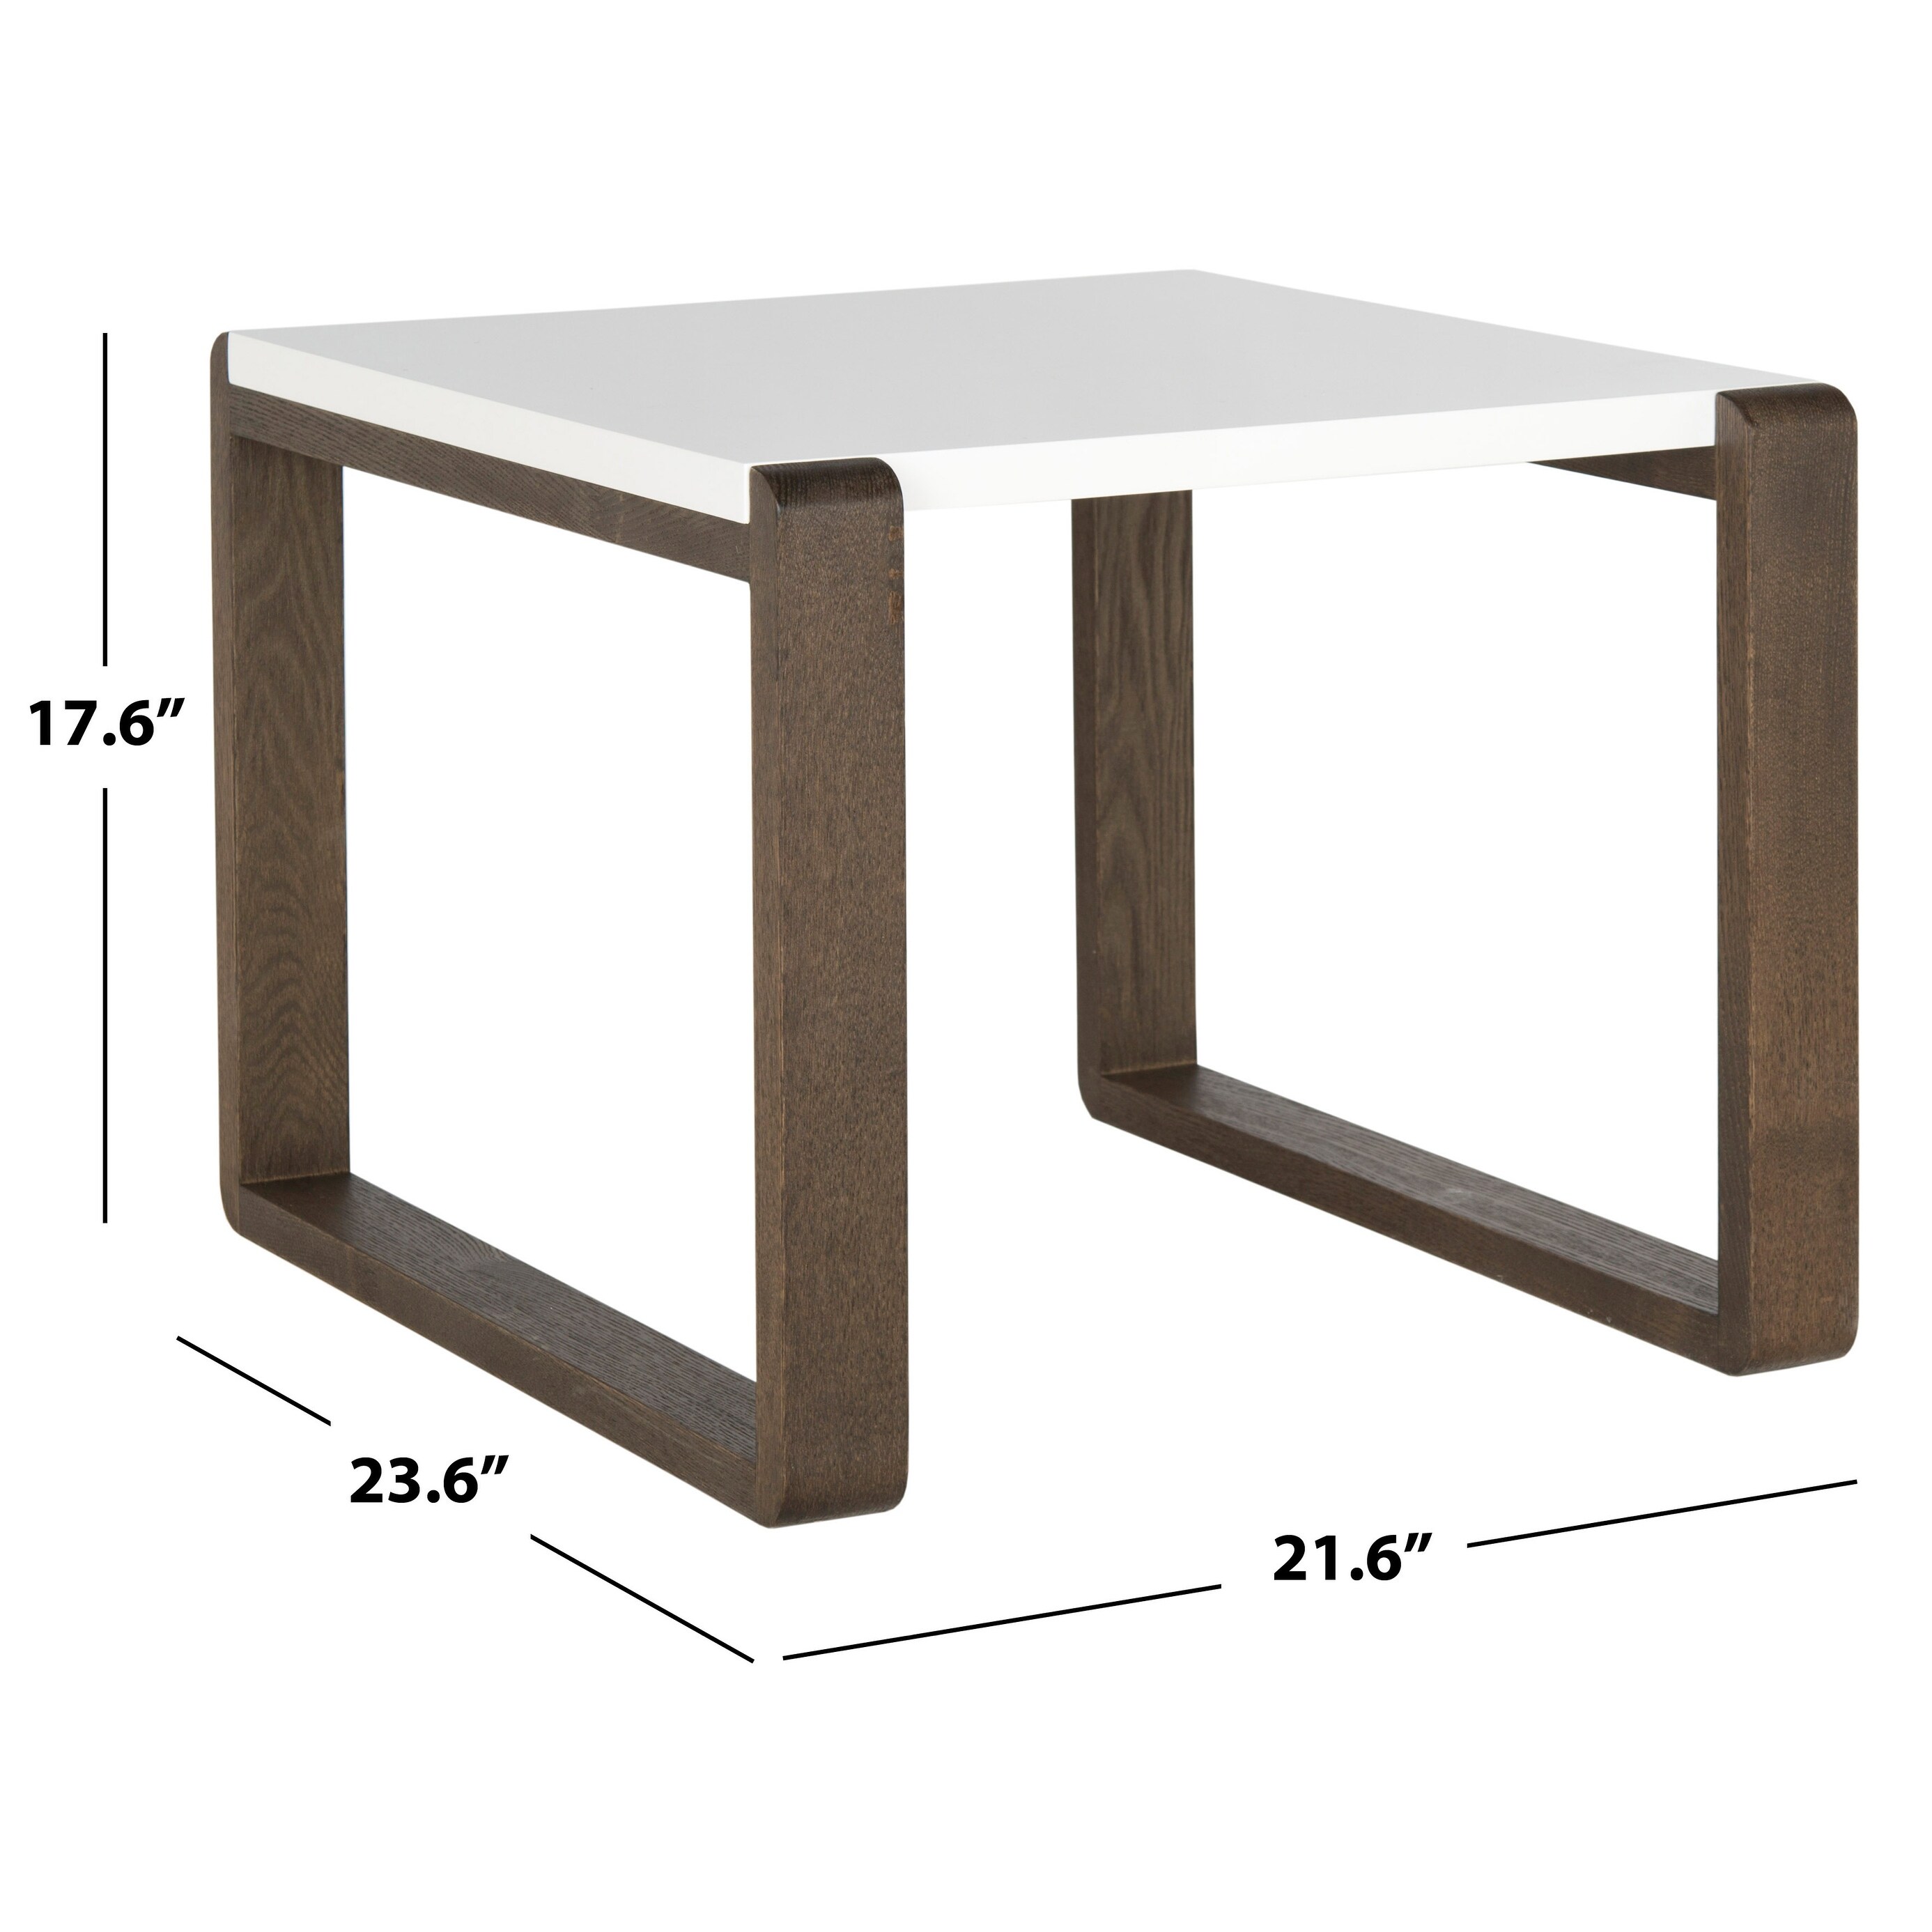 SAFAVIEH Mid-Century Modern Bartholomew White/ Dark Brown Lacquer End Table - 21.6" x 23.6" x 17.6"